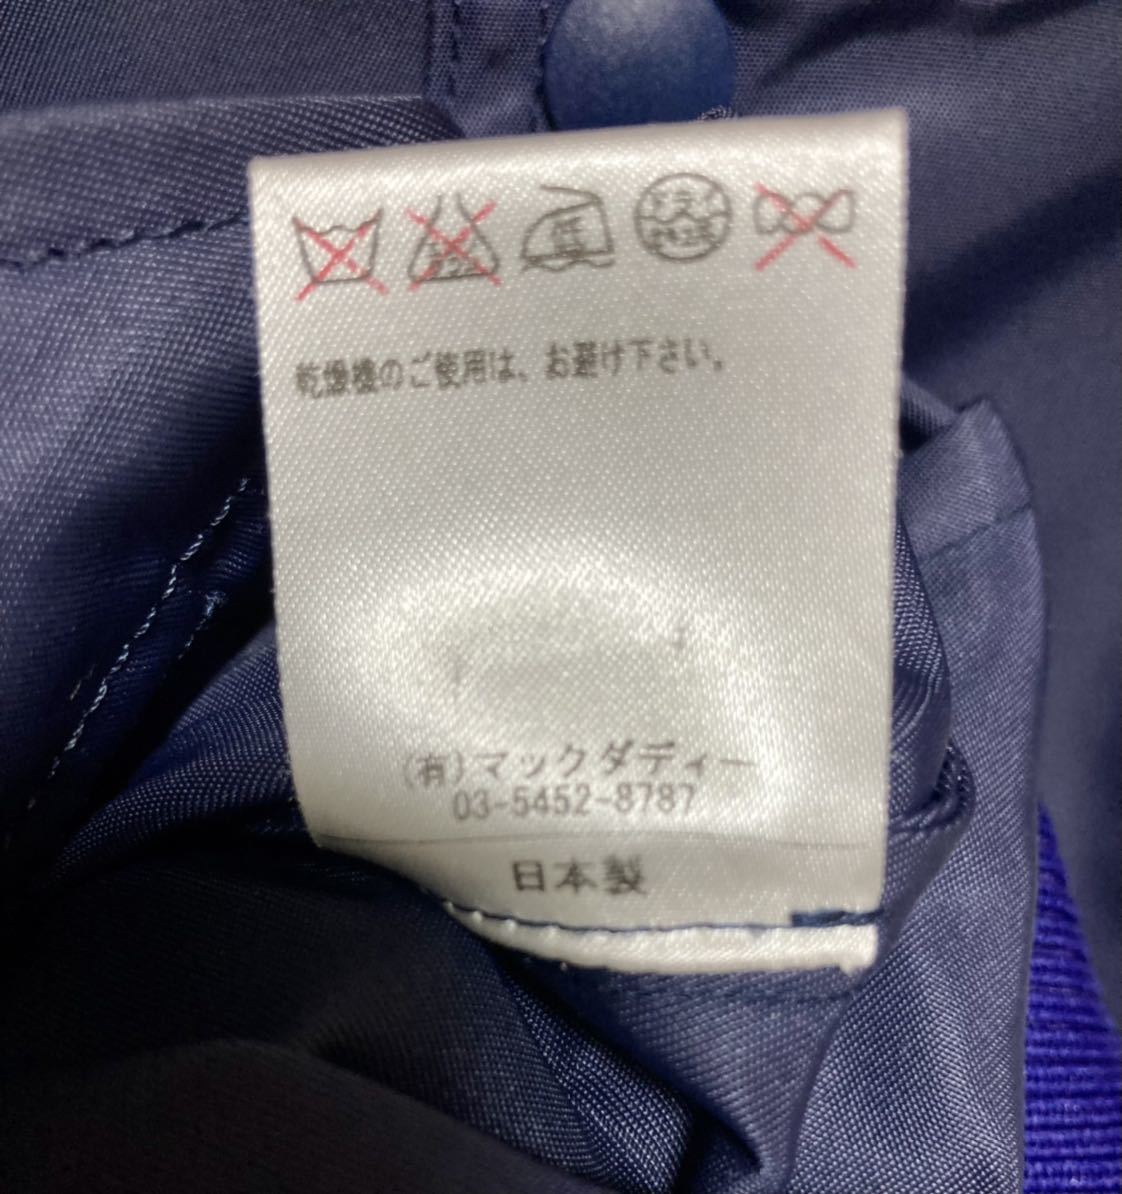 [MACKDADDY] сделано в Японии куртка L размер Mac datiMDY Street made in japan жакет new jak